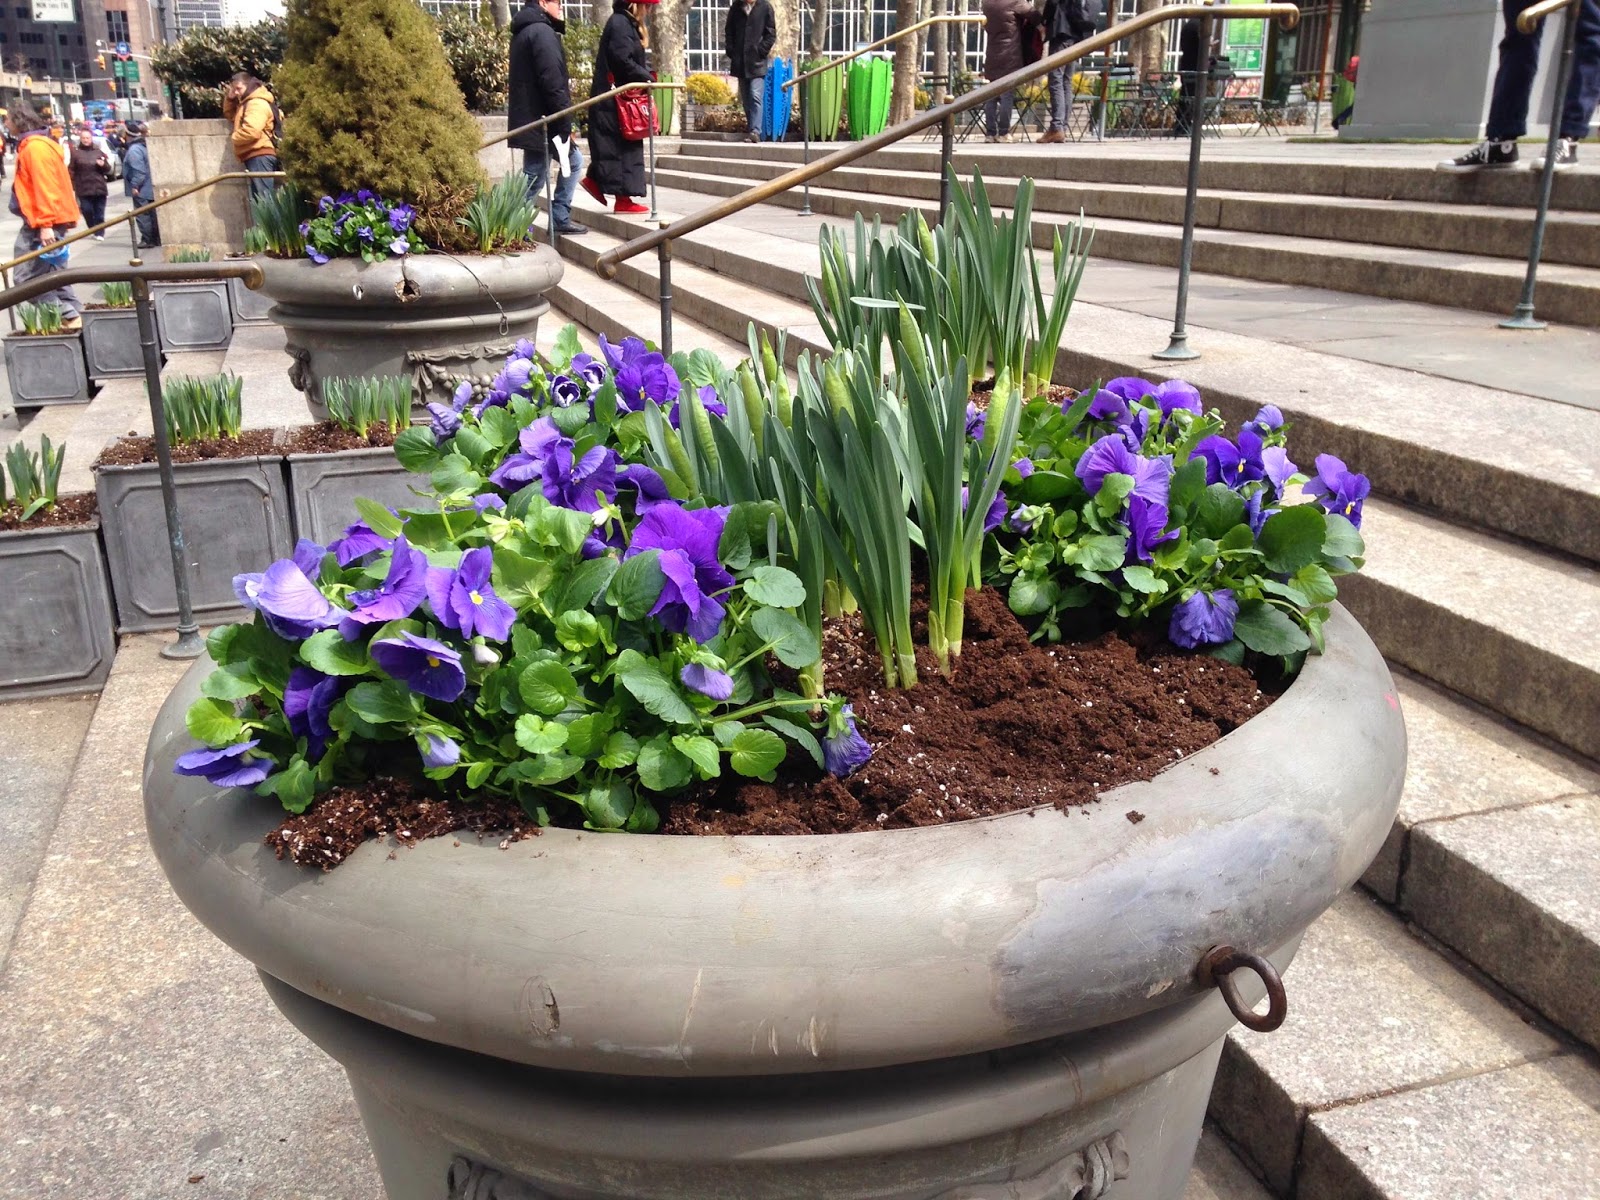 Bryant Park Blog: Horticulture Update: Spring Colors Suddenly Appear